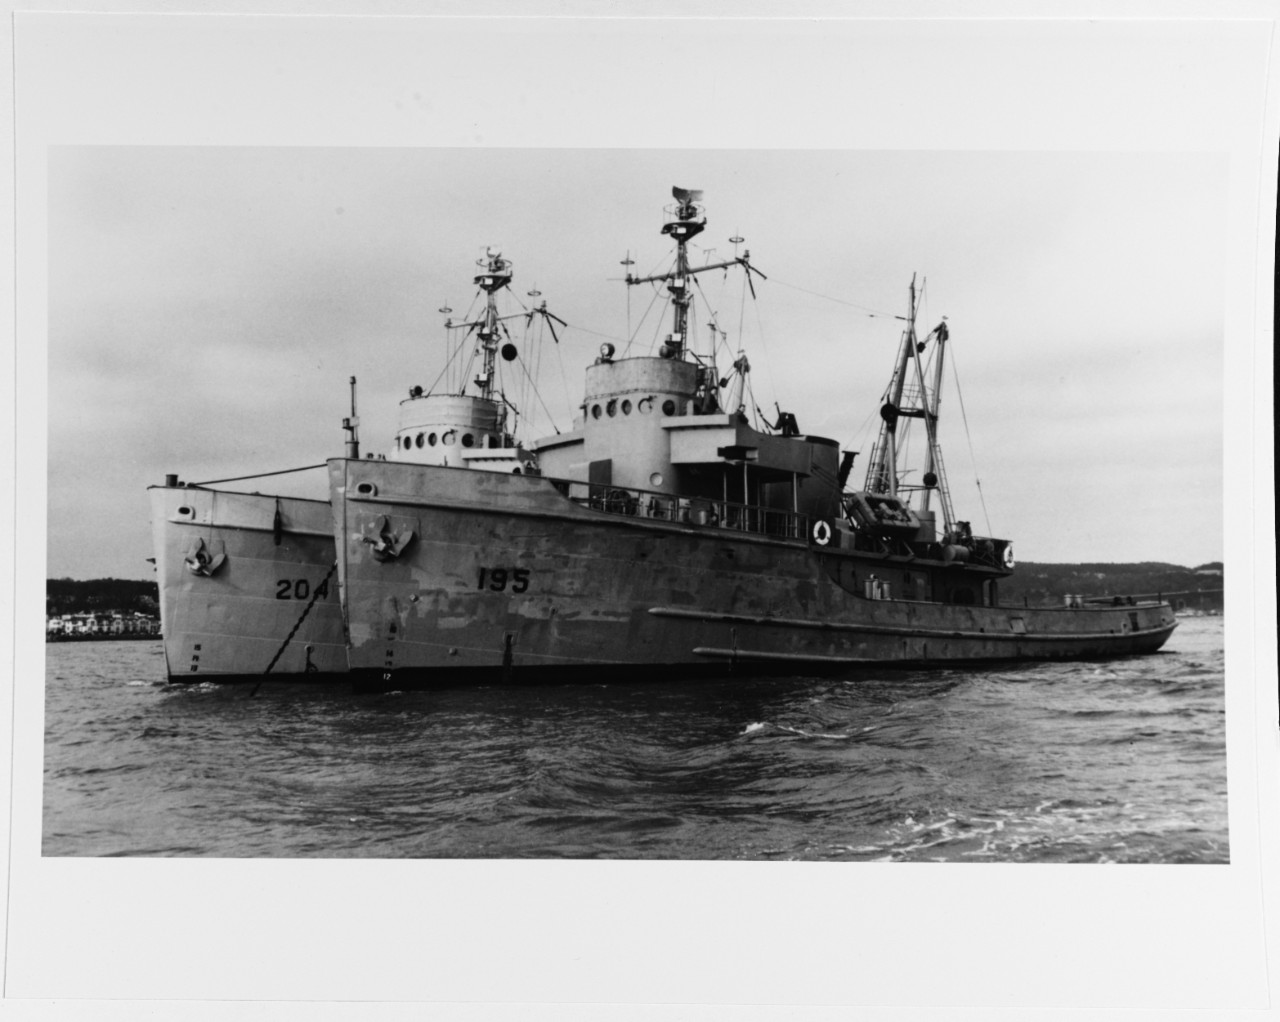 USS TATNUCK (ATA-195) and USS WANDANK (ATA-204)